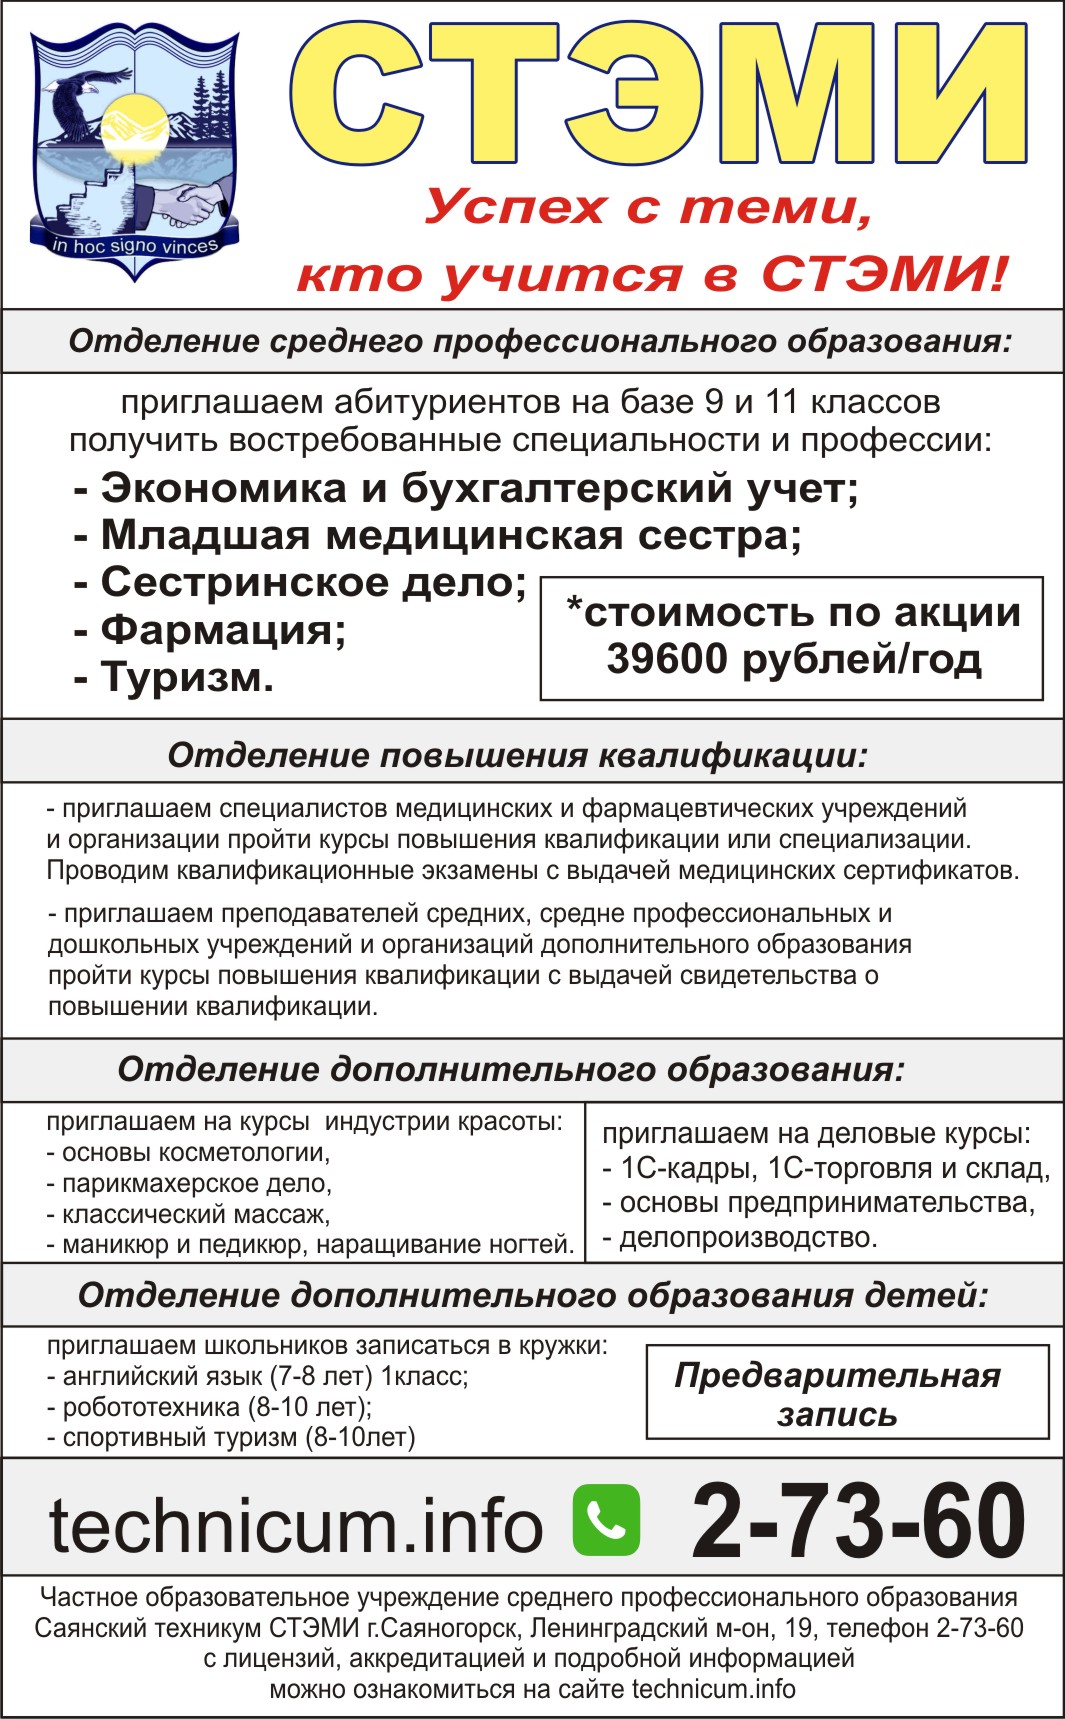 Саяногорск Инфо - reklama-gazety-2016.jpg, Скачано: 293